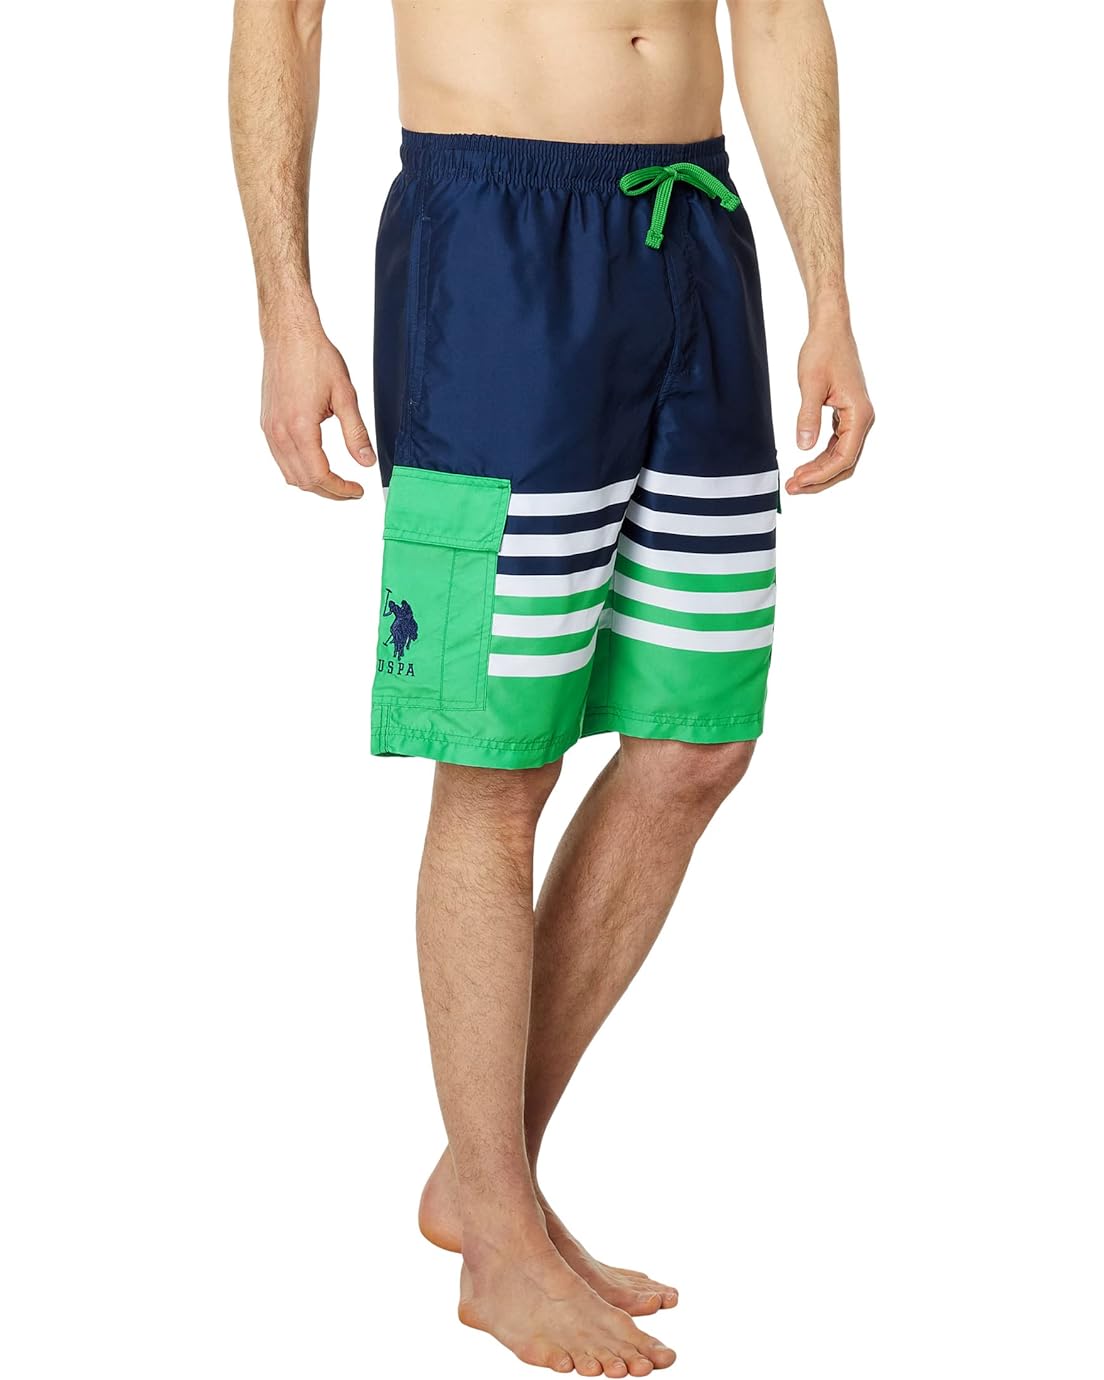 U.S. POLO ASSN. Stripe Color-Block Cargo Swim Shorts